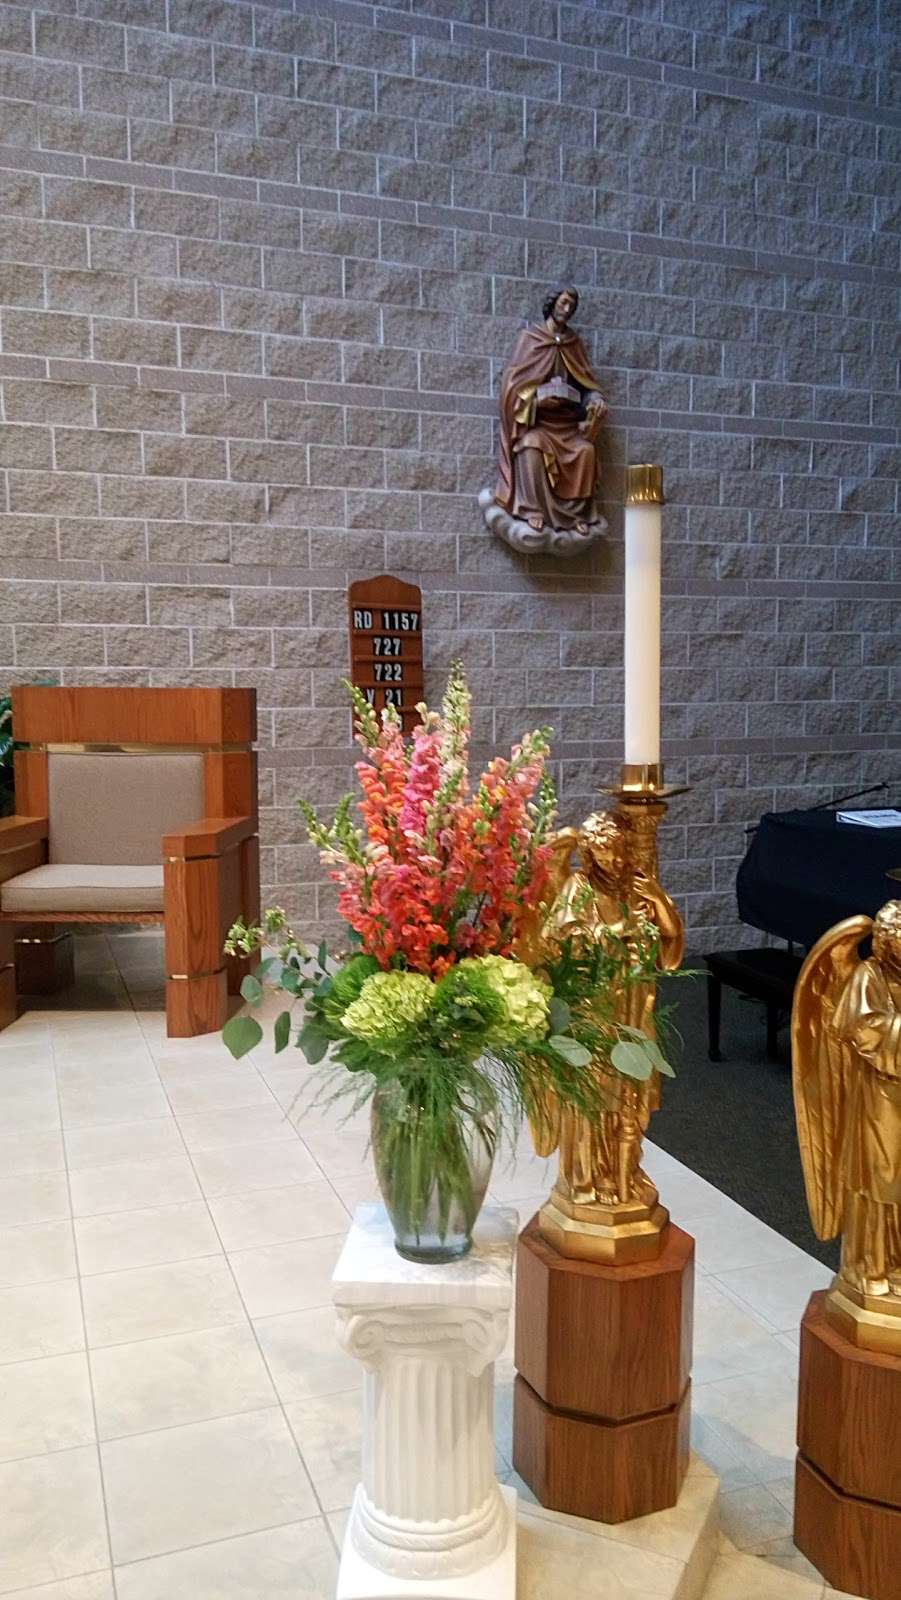 Our Lady of Mercy Catholic Church | 701 S Eola Rd, Aurora, IL 60504, USA | Phone: (630) 851-3444